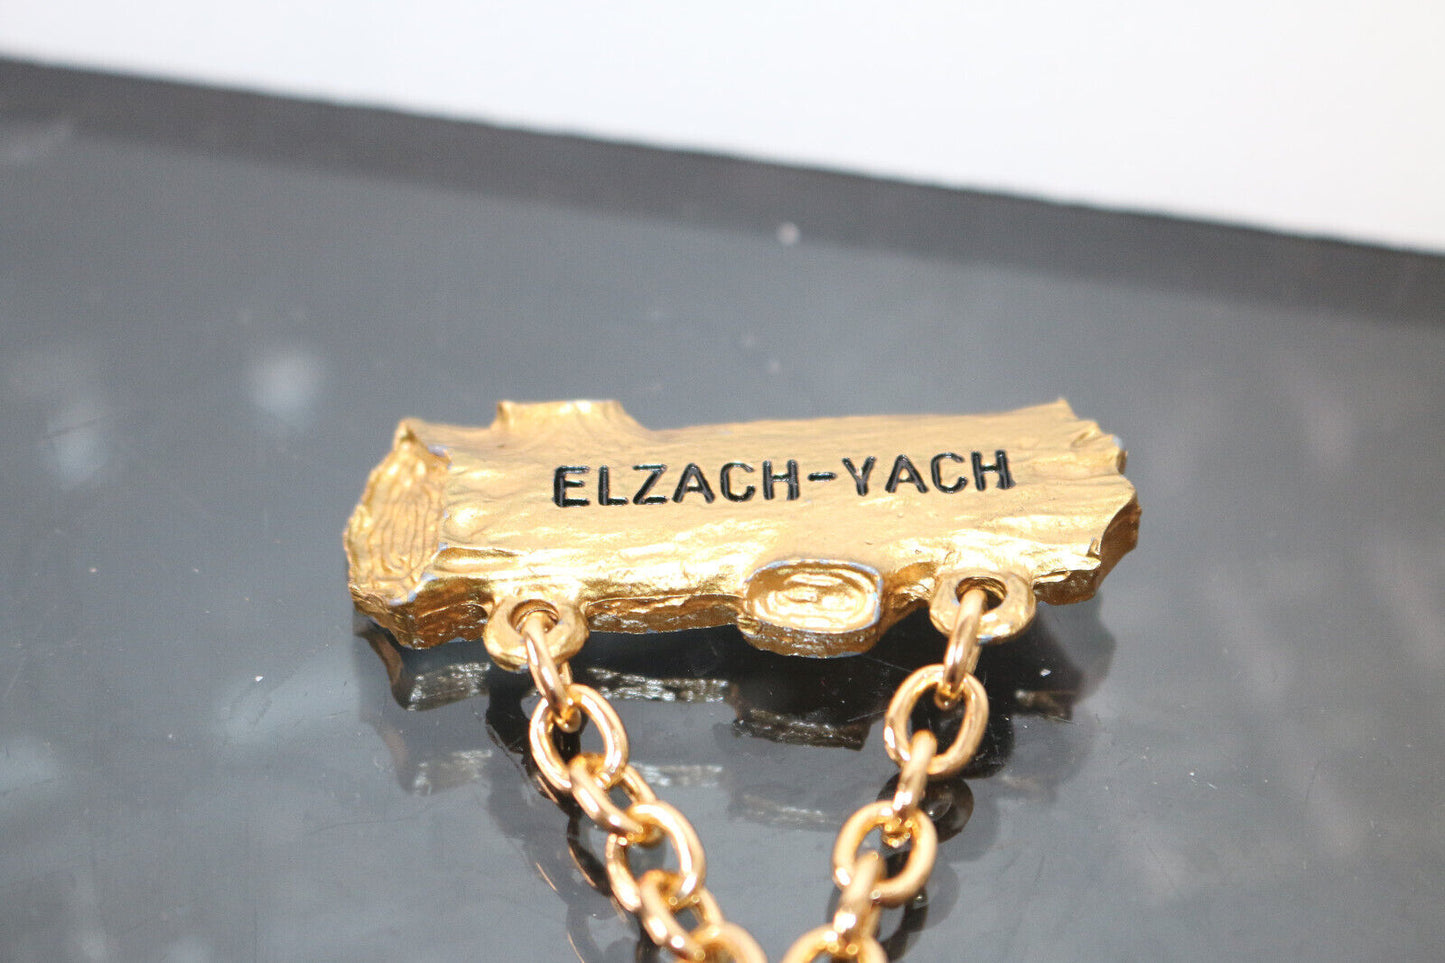 Vintage Rare Elzach-Vach 4 Int.Winter Waderunb 1990 Maccaron Pin On Golden Chain